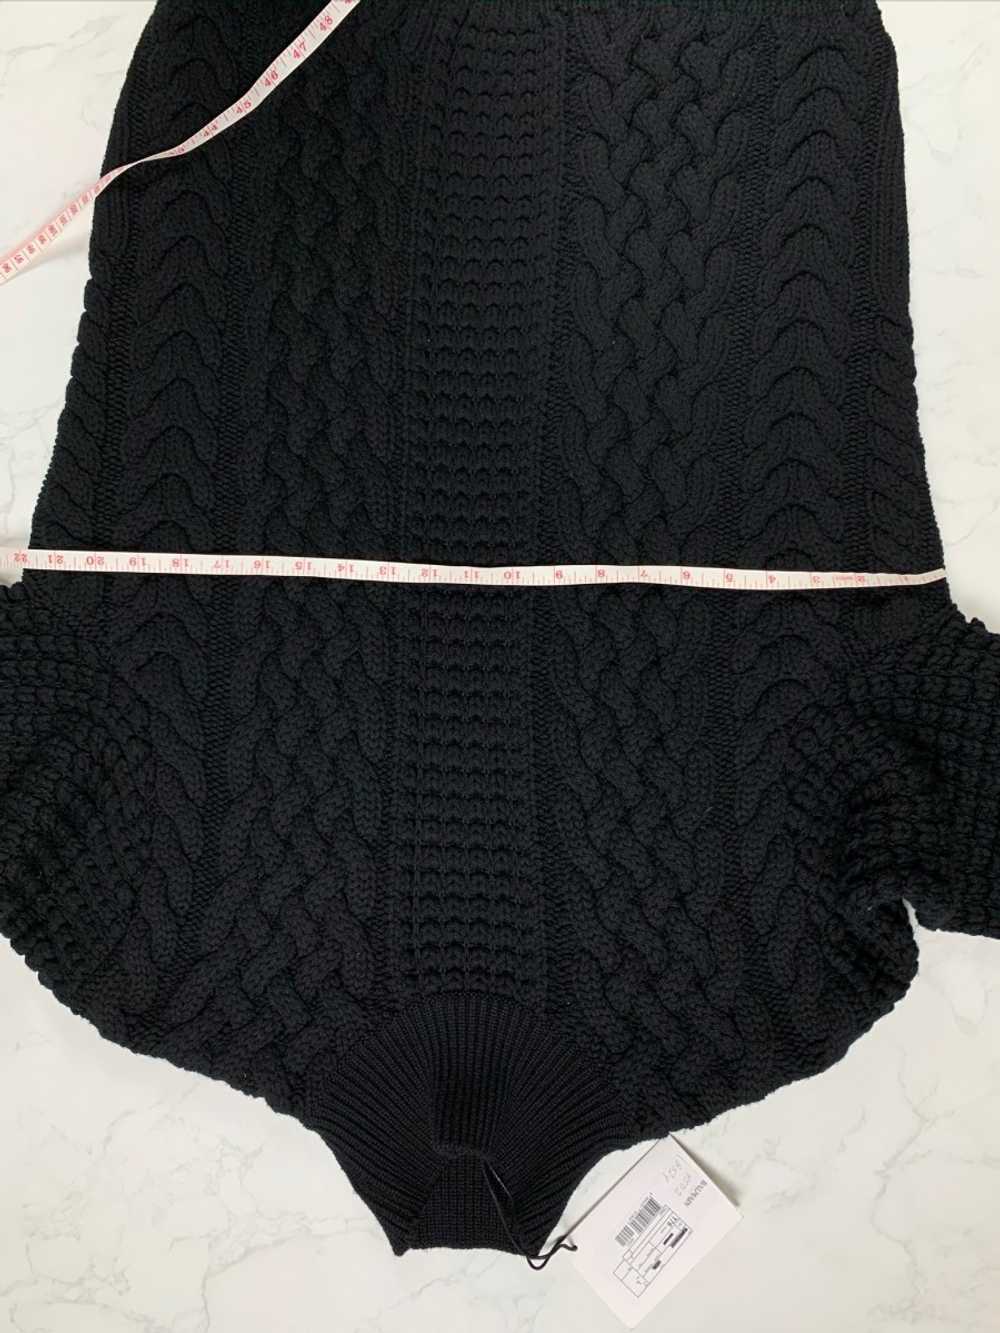 Balmain Black Wool Cable Knit Turtleneck - image 3